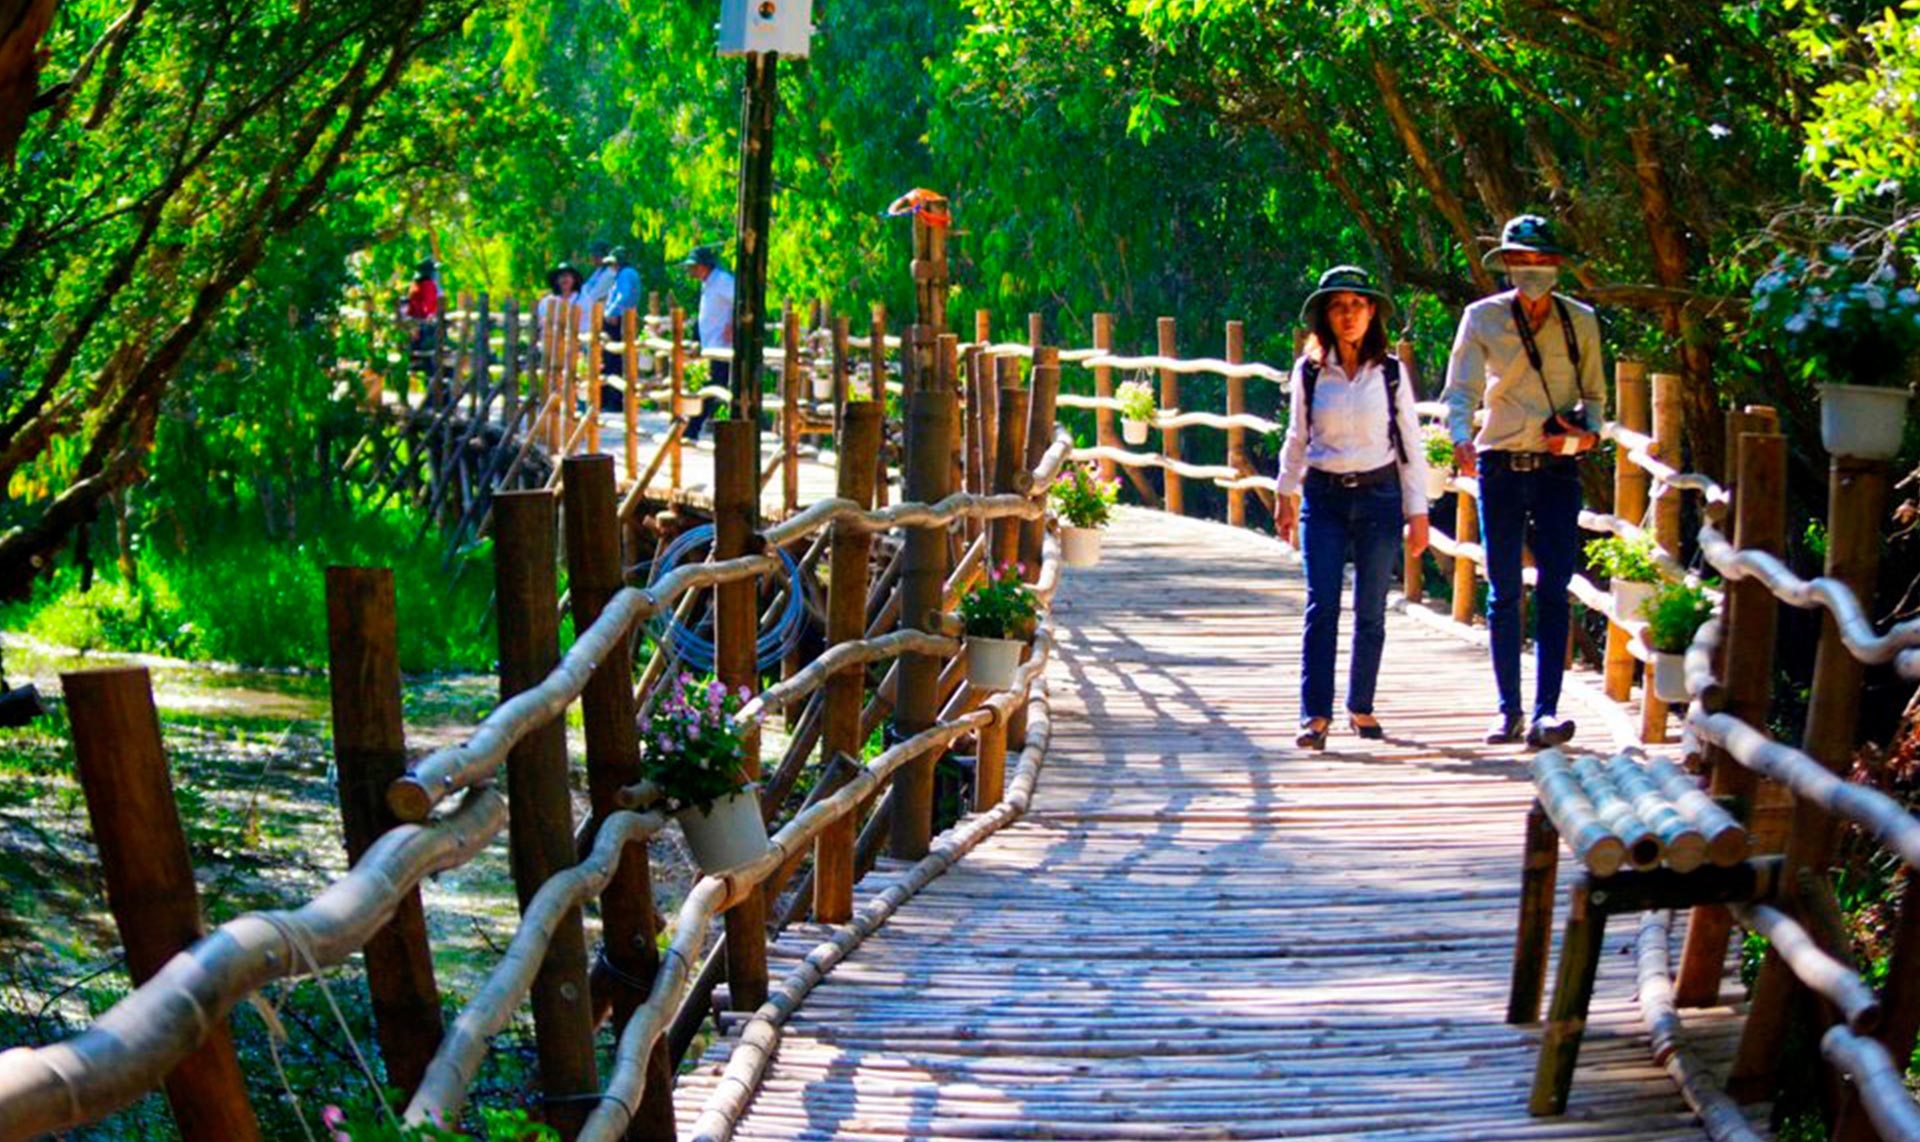 Tra Su bamboo bridge - The Vietnam’s longest bamboo bridge